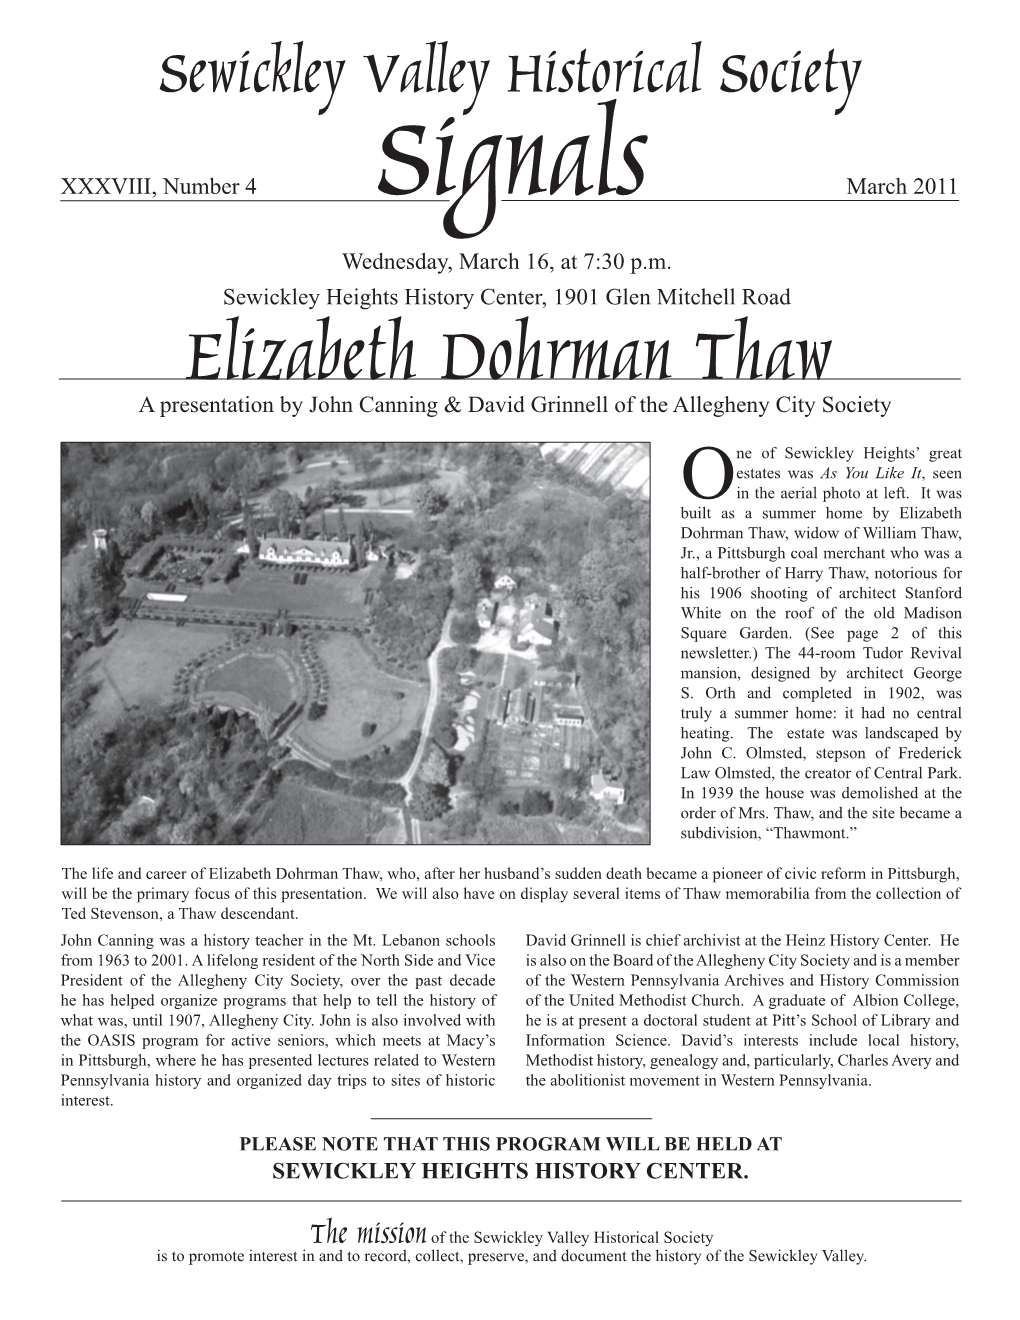 Elizabeth Dohrman Thaw a Presentation by John Canning & David Grinnell of the Allegheny City Society